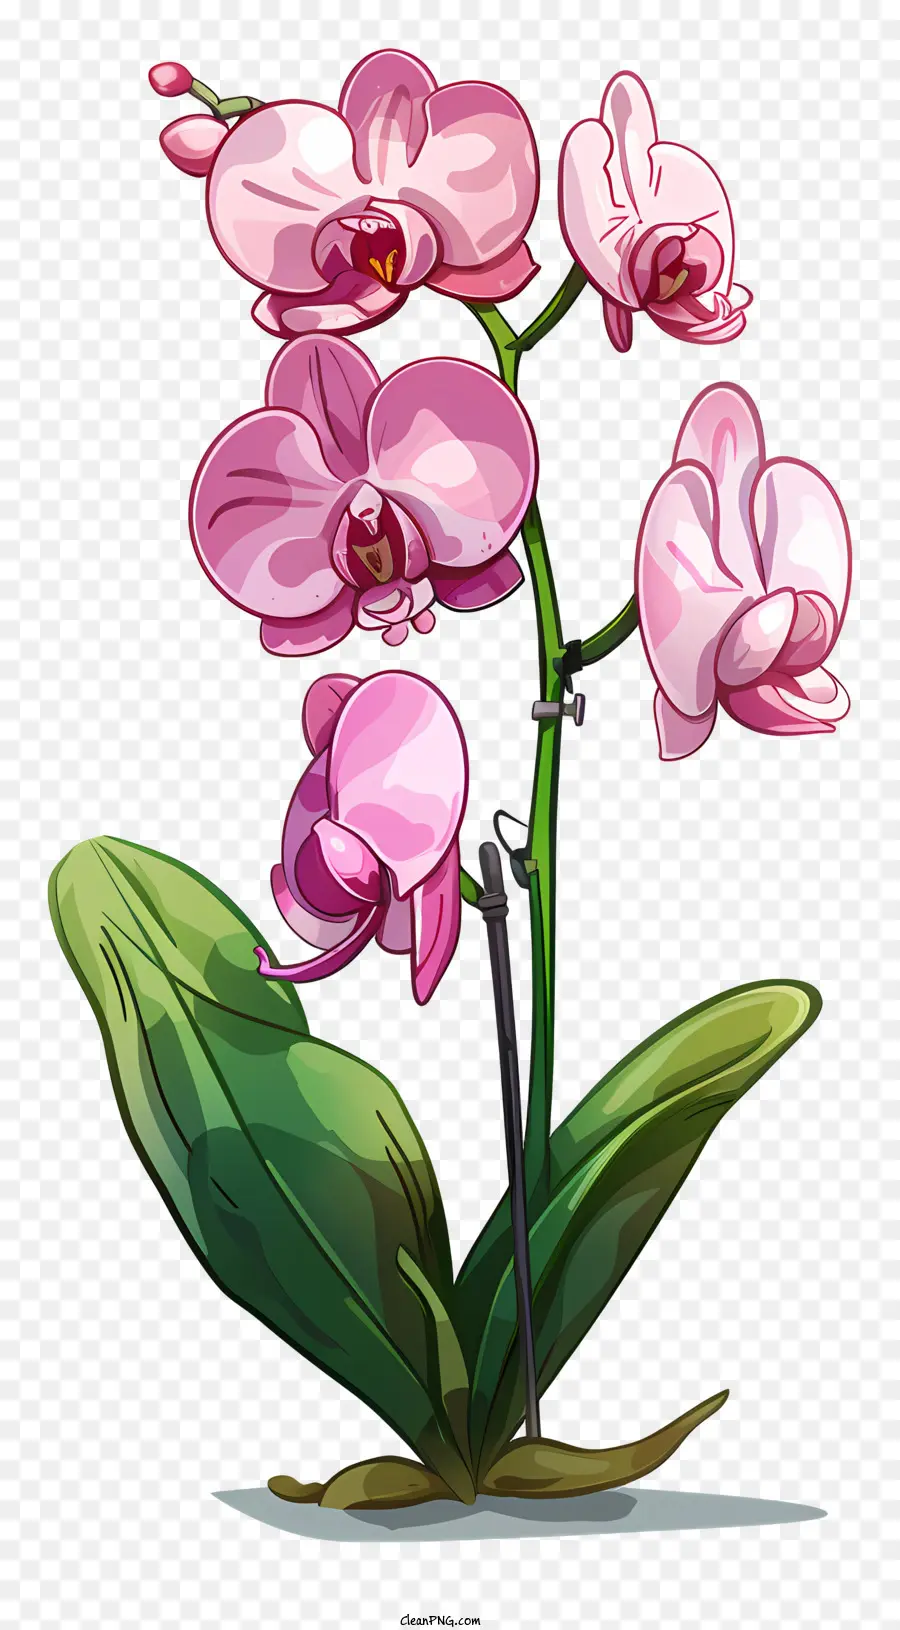 Orchideen -Tag rosa Orchideenblumen Orchideenpflanze blühen - Rosa Orchidee mit dunklen Blütenblättern, weißes Zentrum